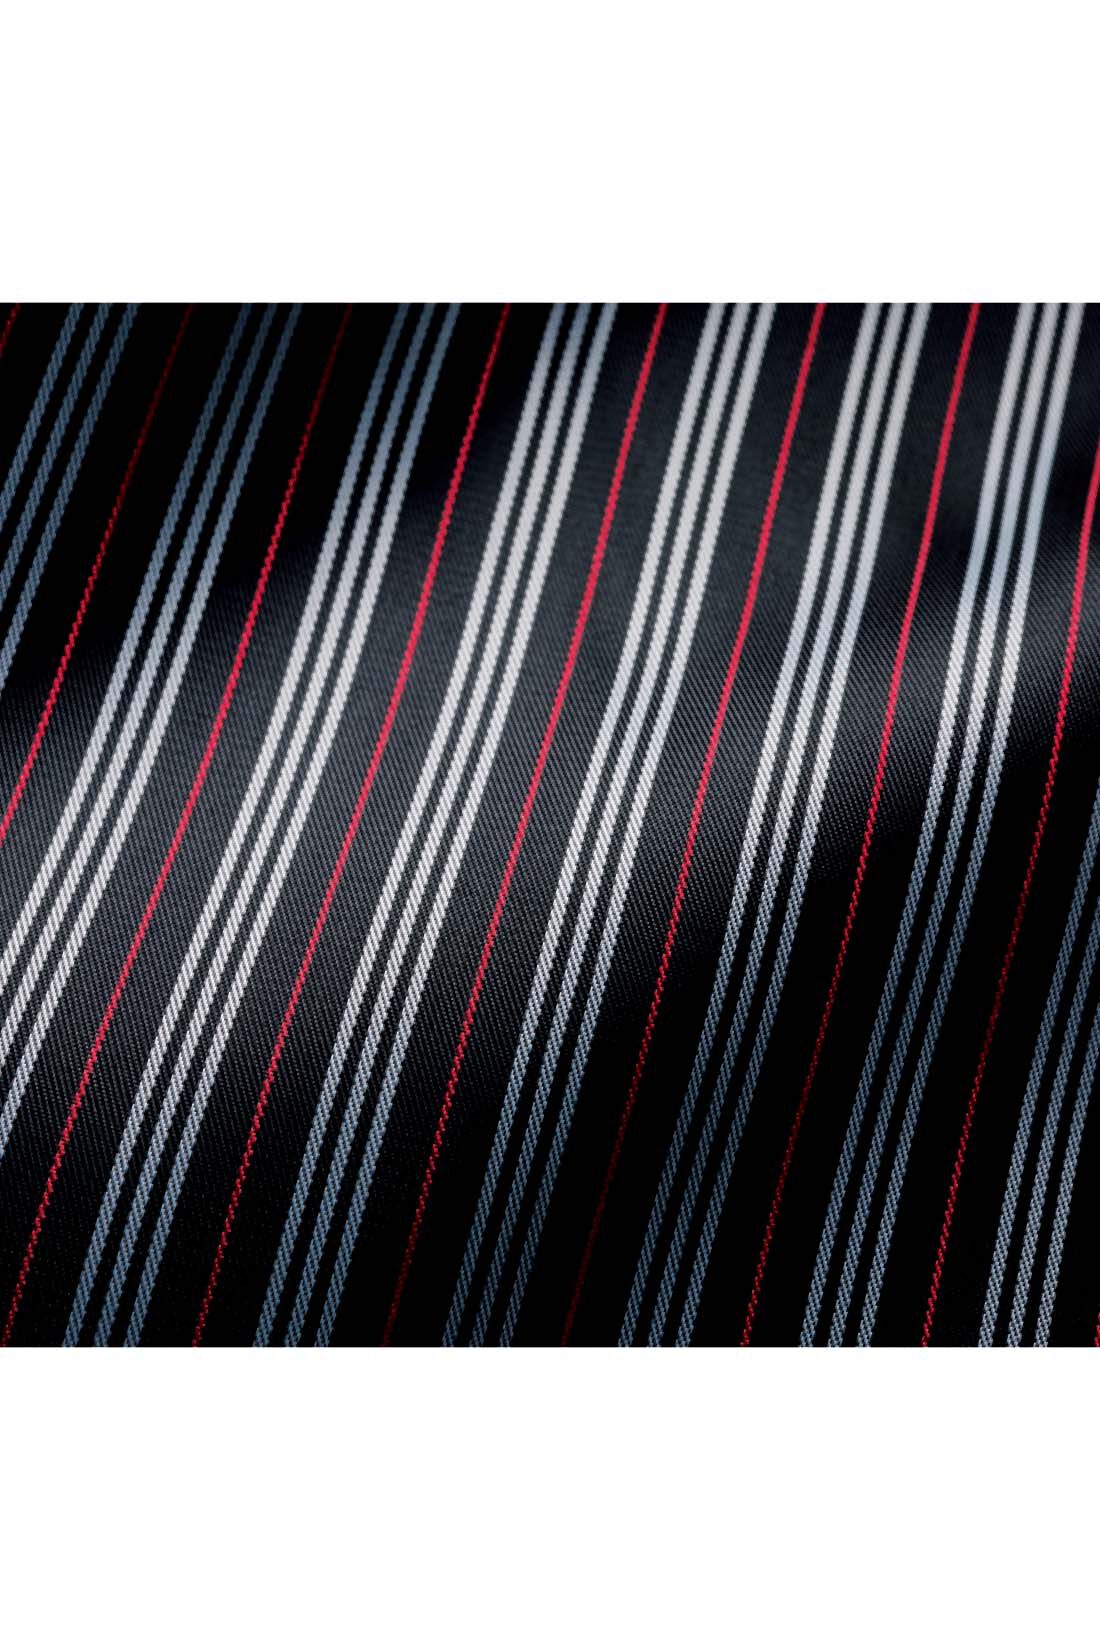 DRECO by IEDIT|IEDIT[イディット]　スライバーニット素材で軽くて暖か ゆるっと着こなす新鮮ロング丈Pコート〈ブラック〉|裏地は赤をきかせたストライプ柄。